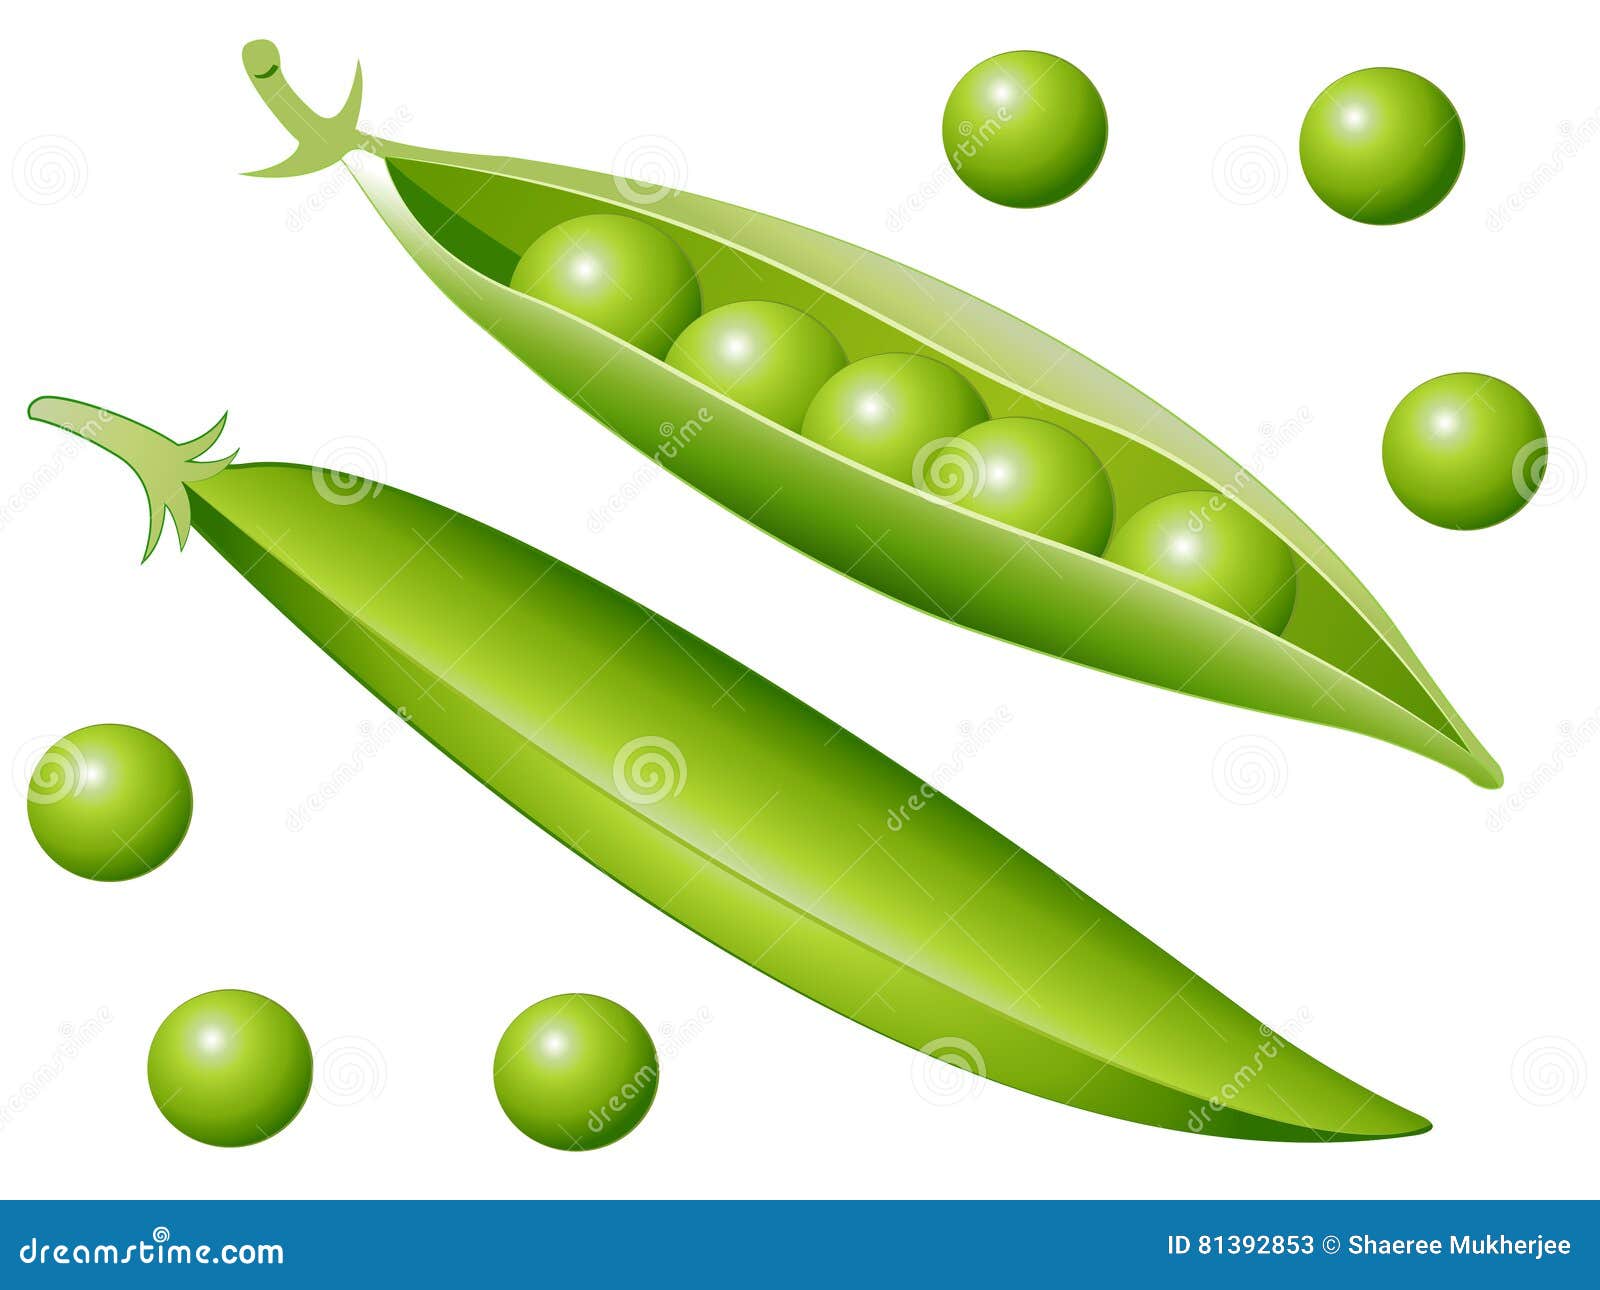 Cartoon Peas stock vector. Illustration of peas, vector - 81392853